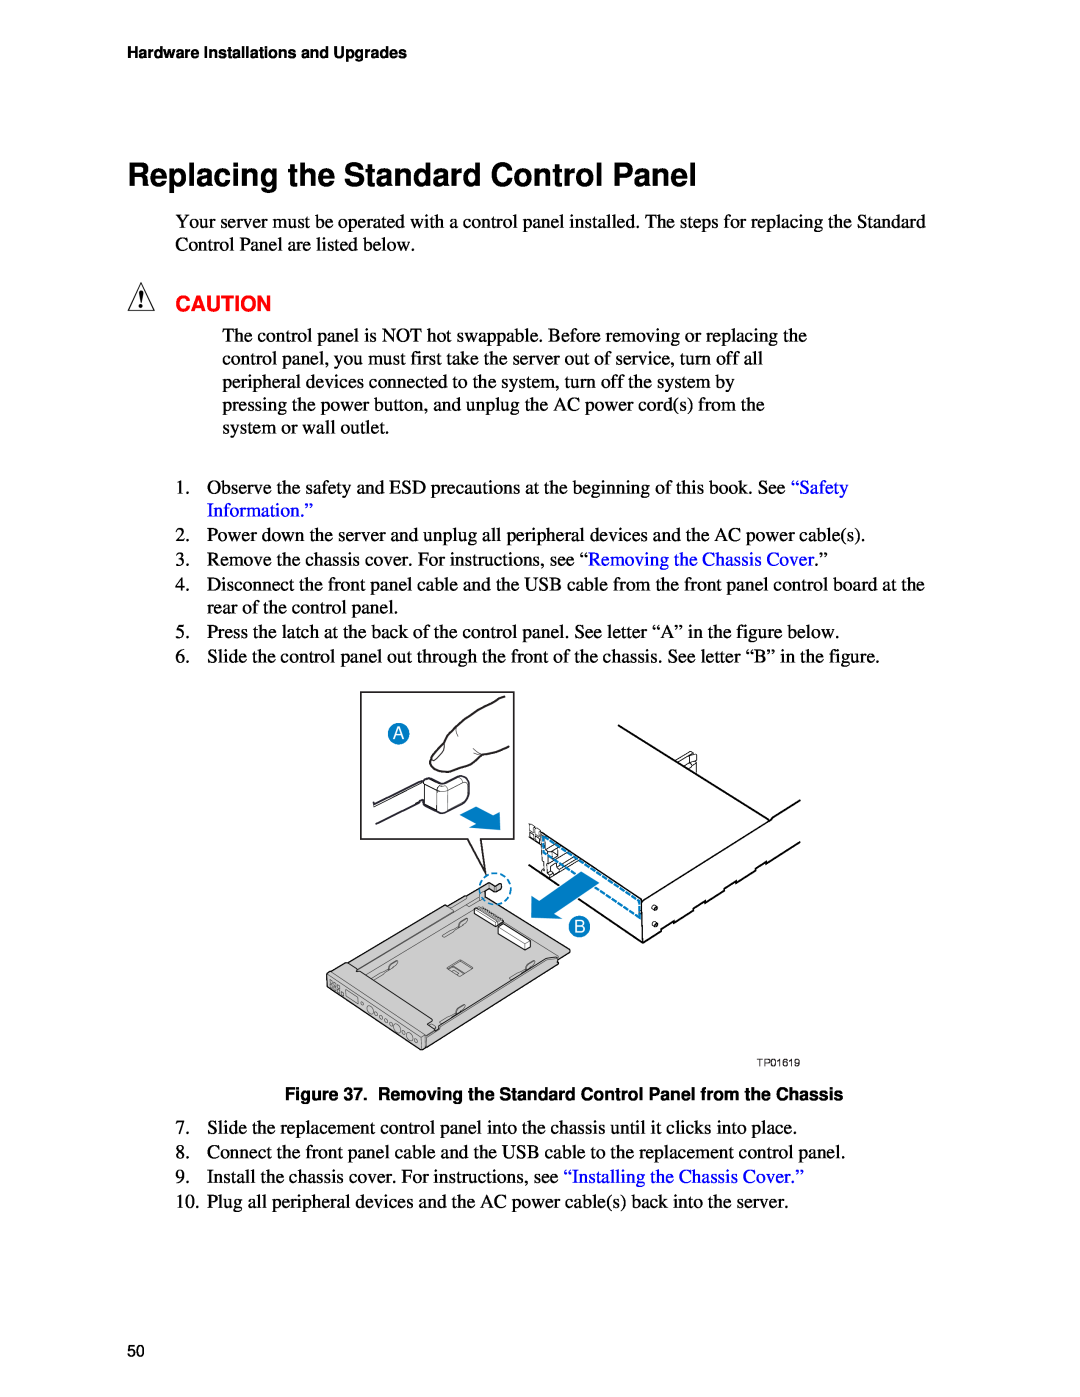 Intel SR1450 manual Replacing the Standard Control Panel, TP01619 